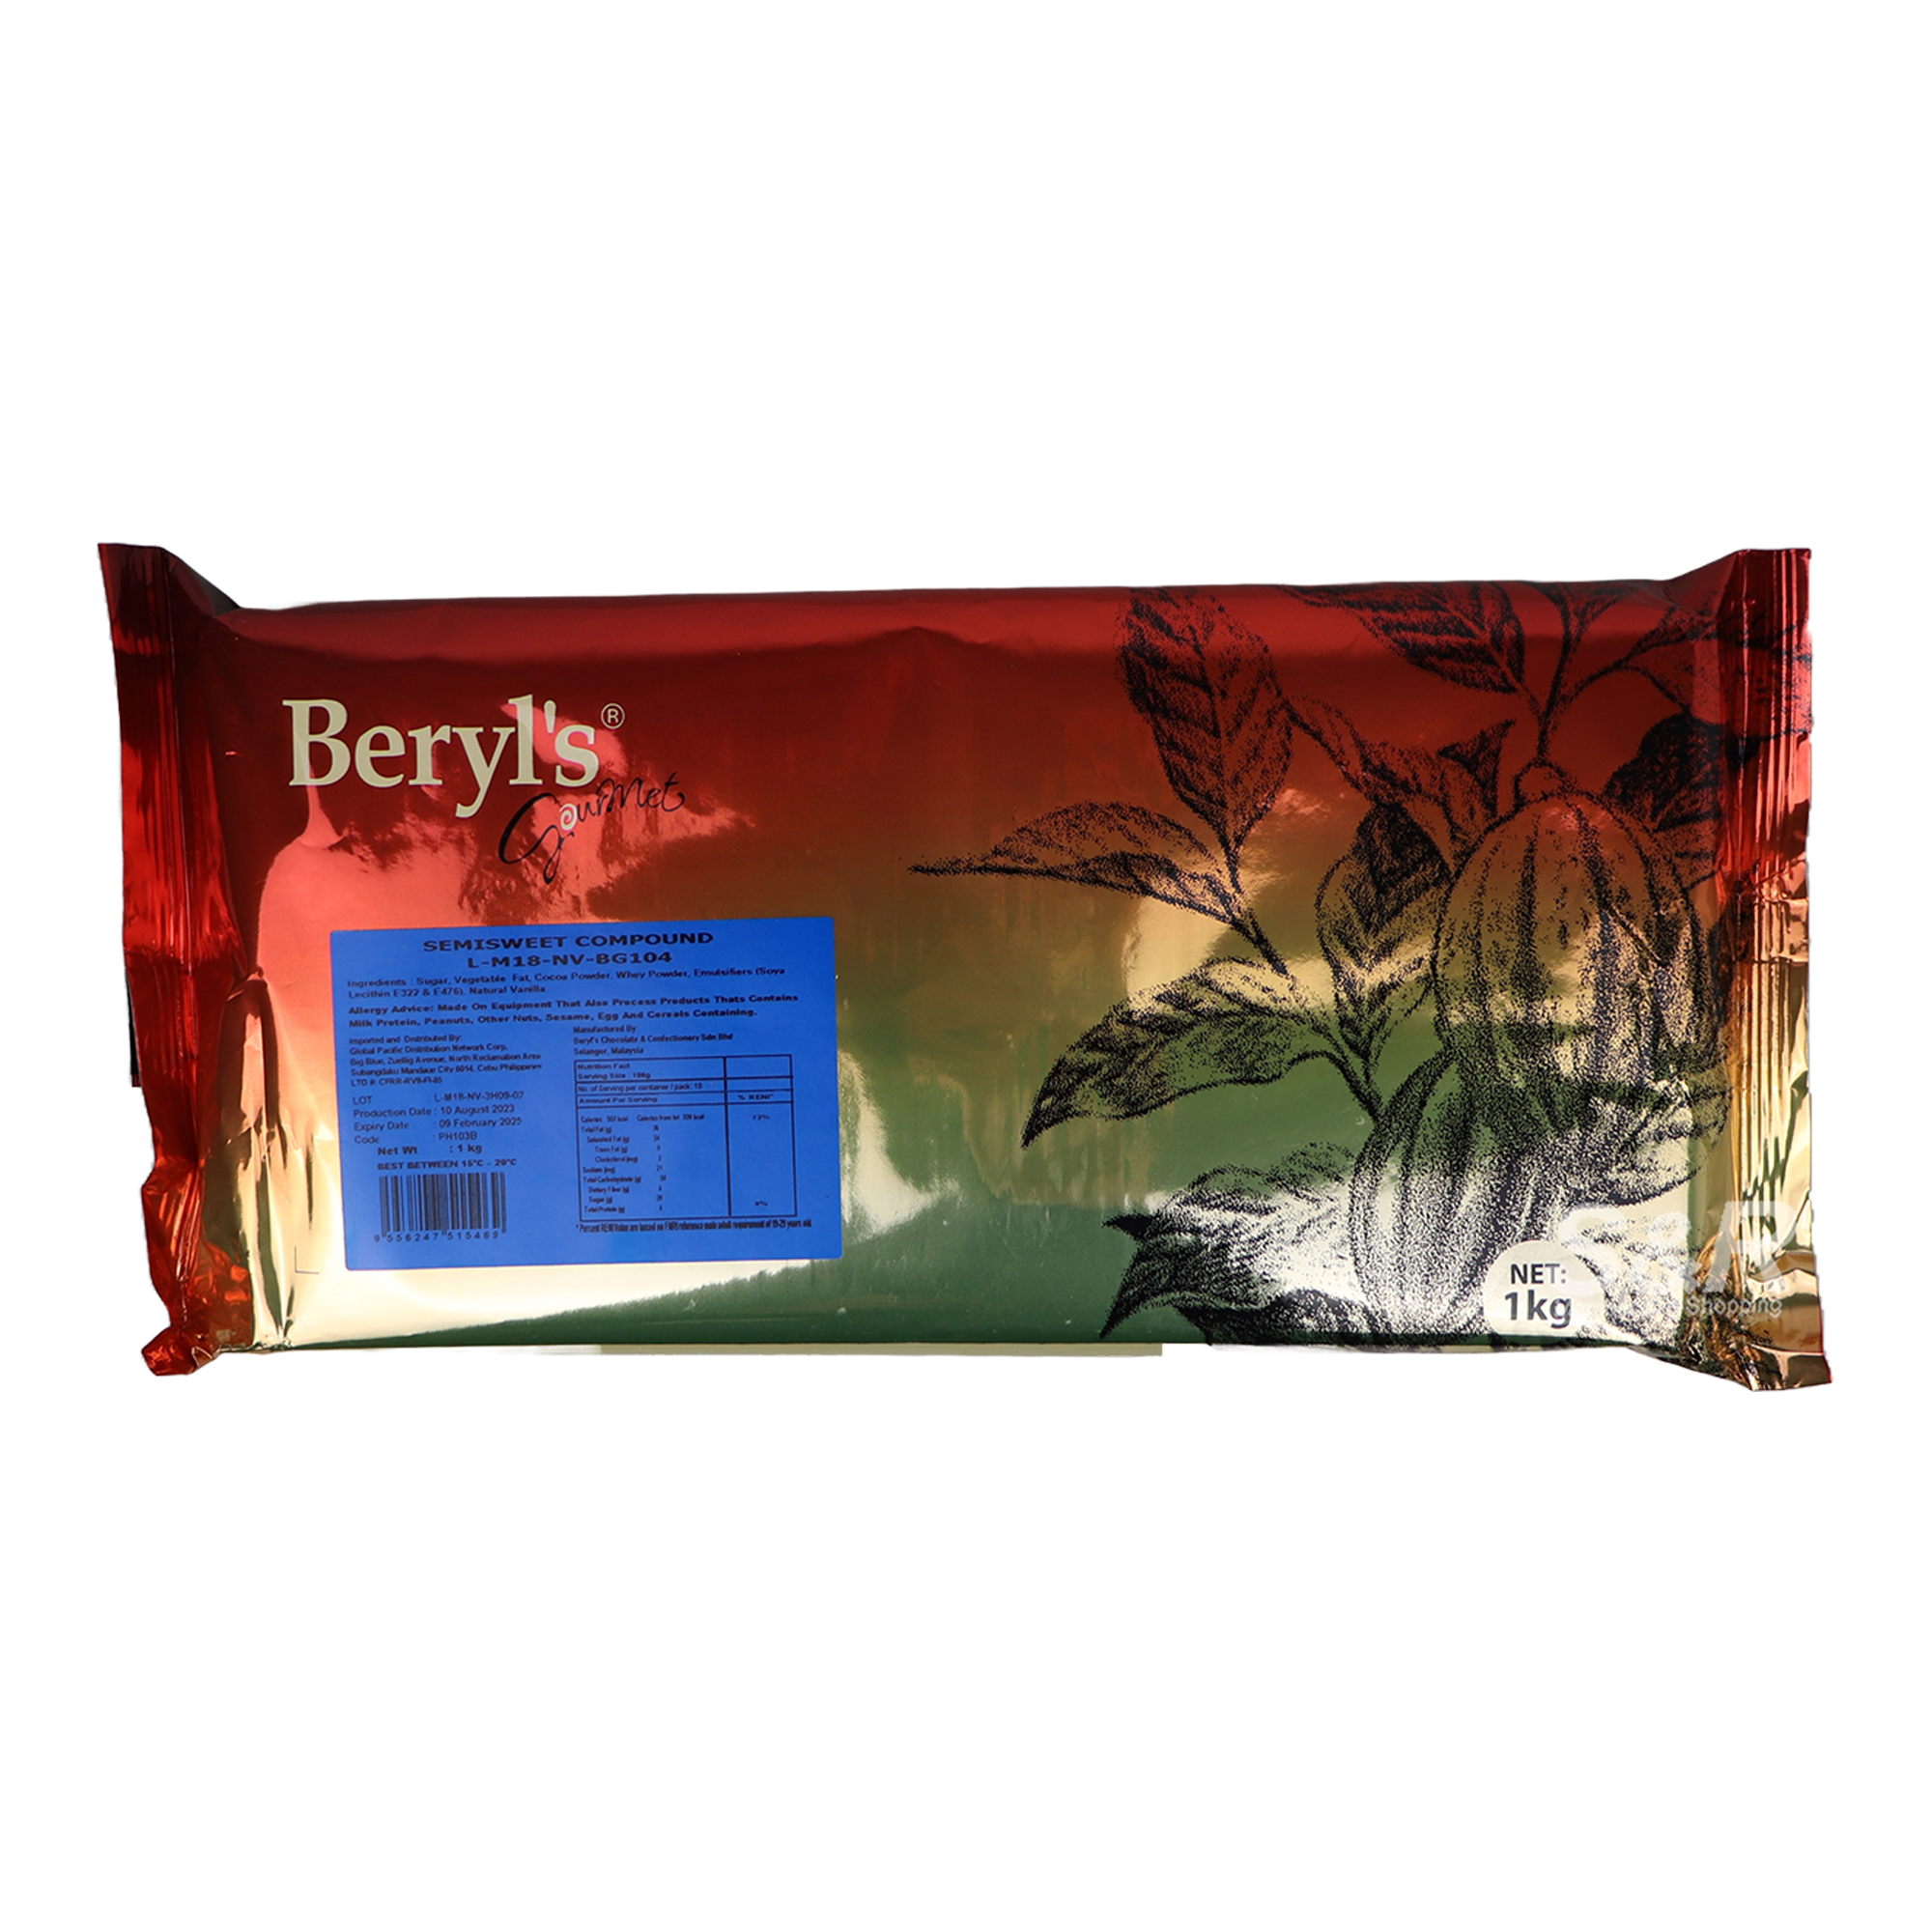 Beryls Semisweet Compound Baking Bar 1kg